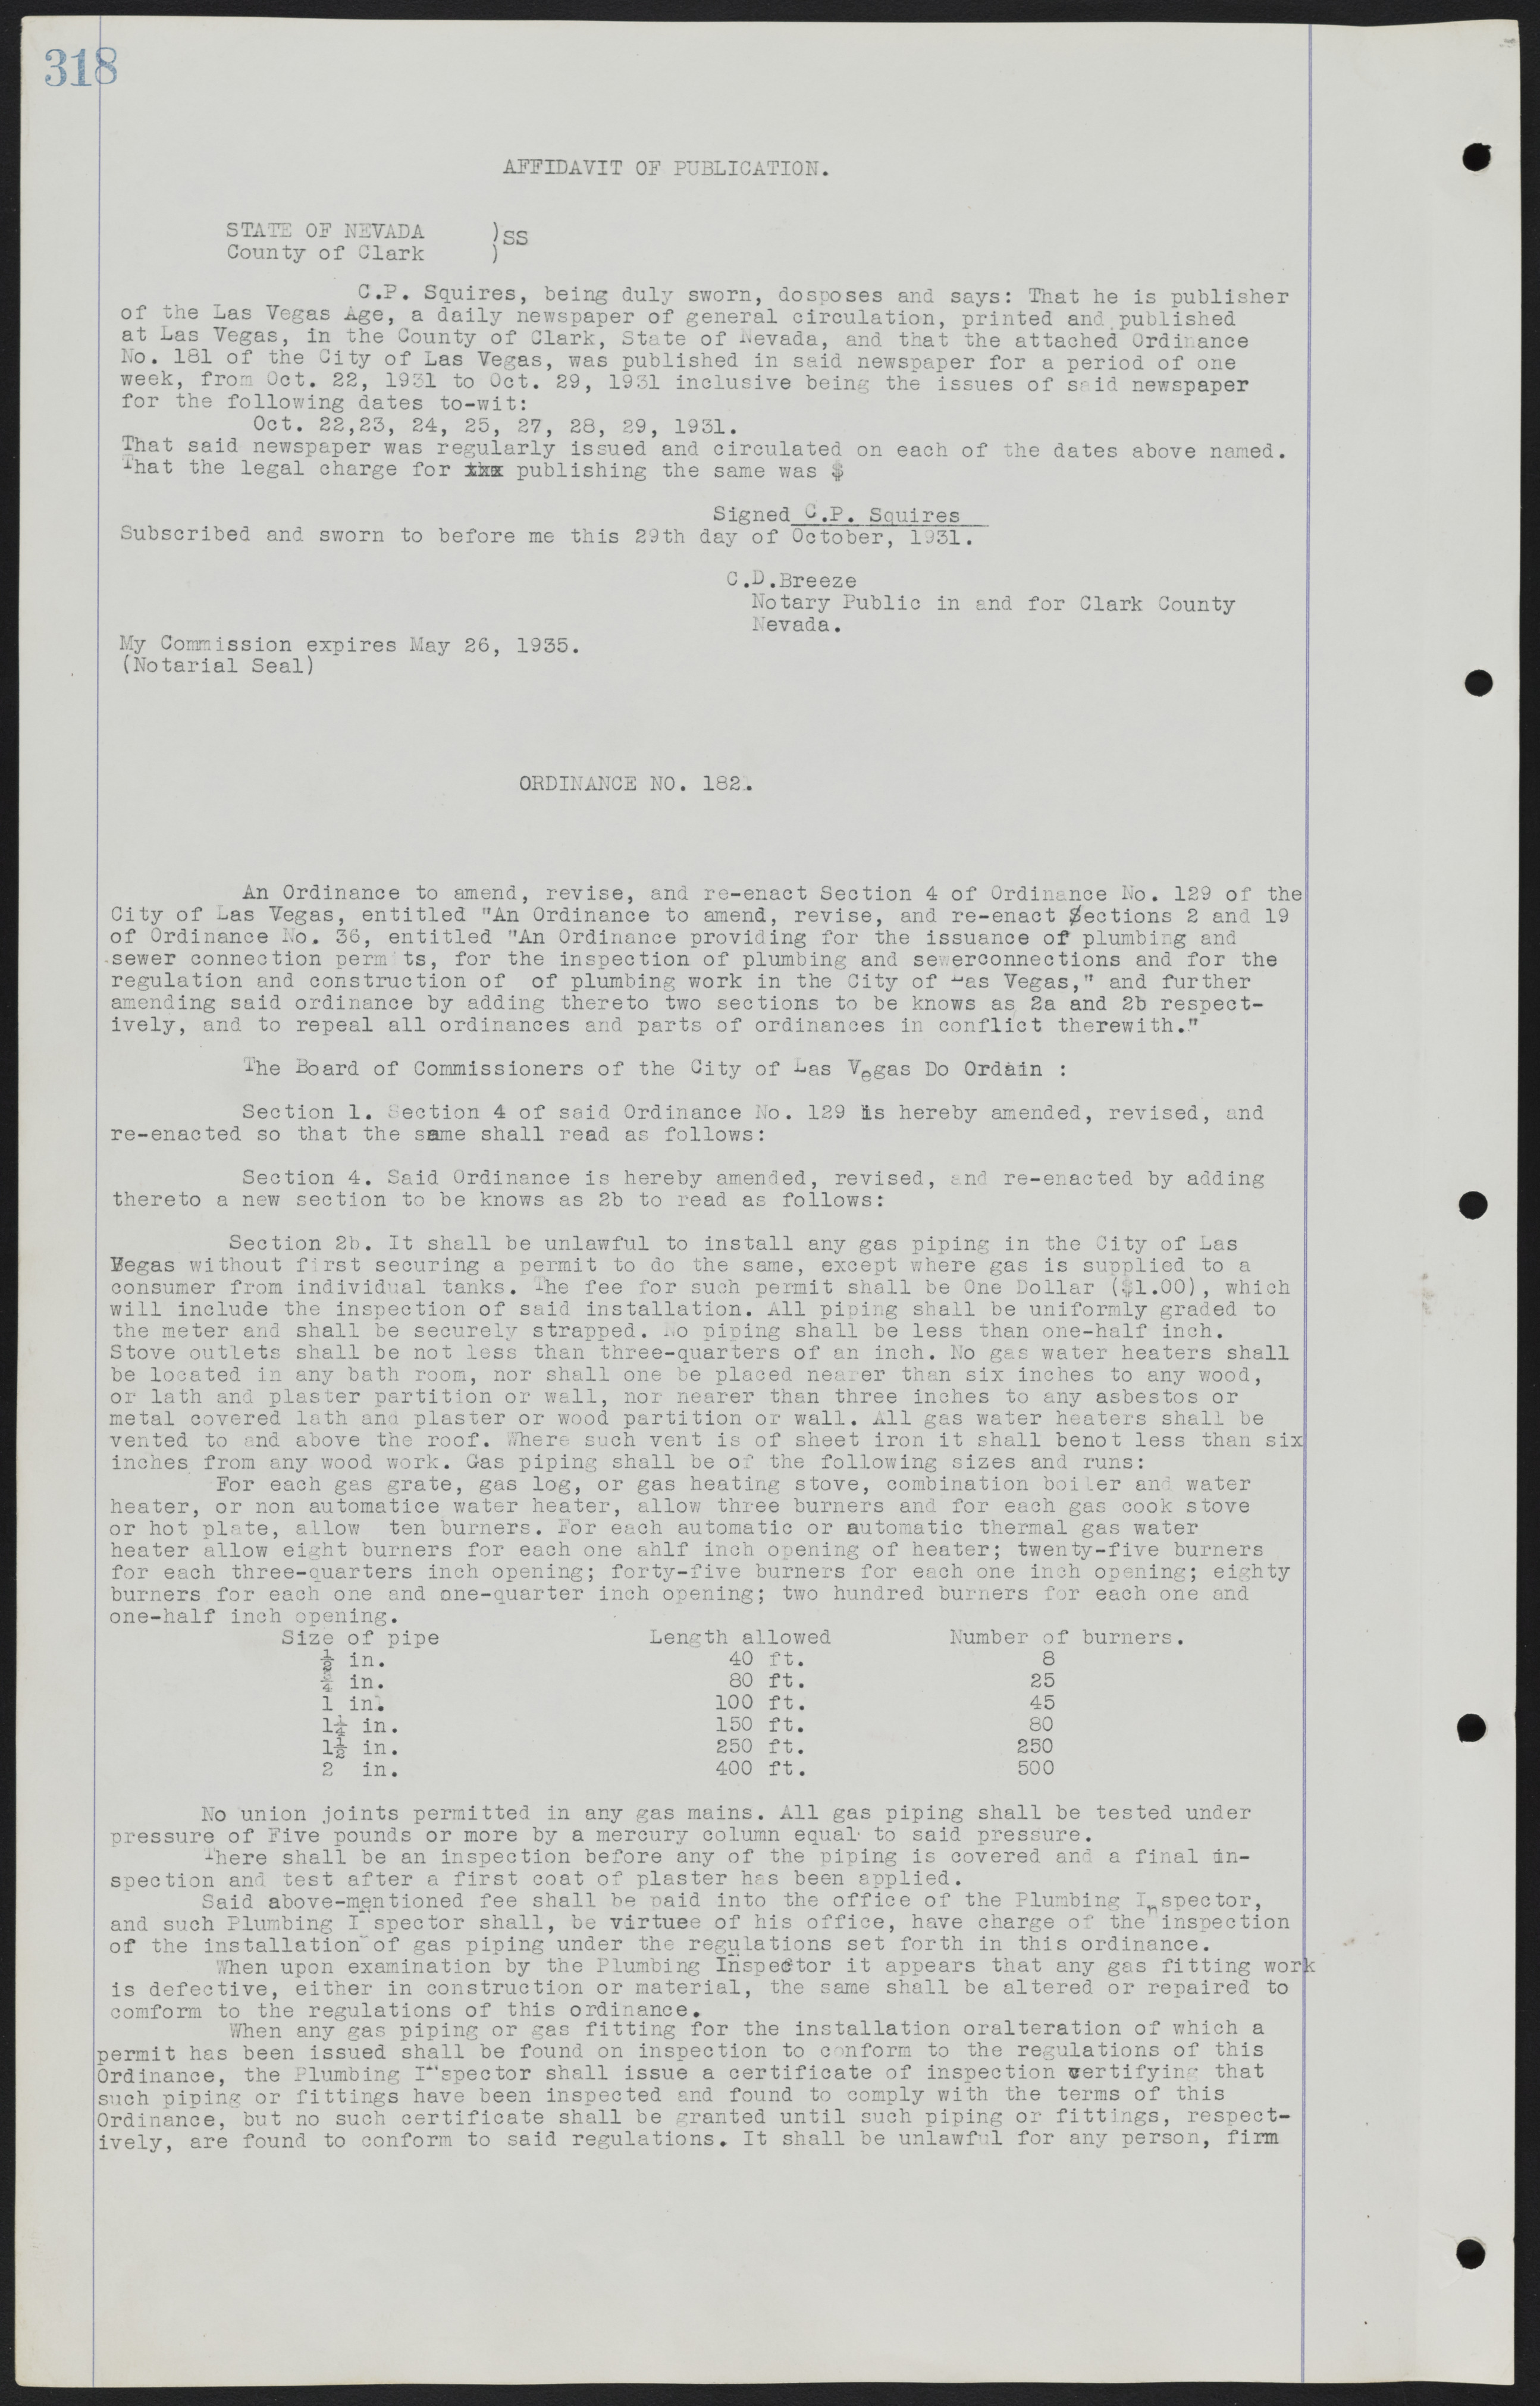 Las Vegas City Ordinances, July 18, 1911 to March 31, 1933, lvc000013-322